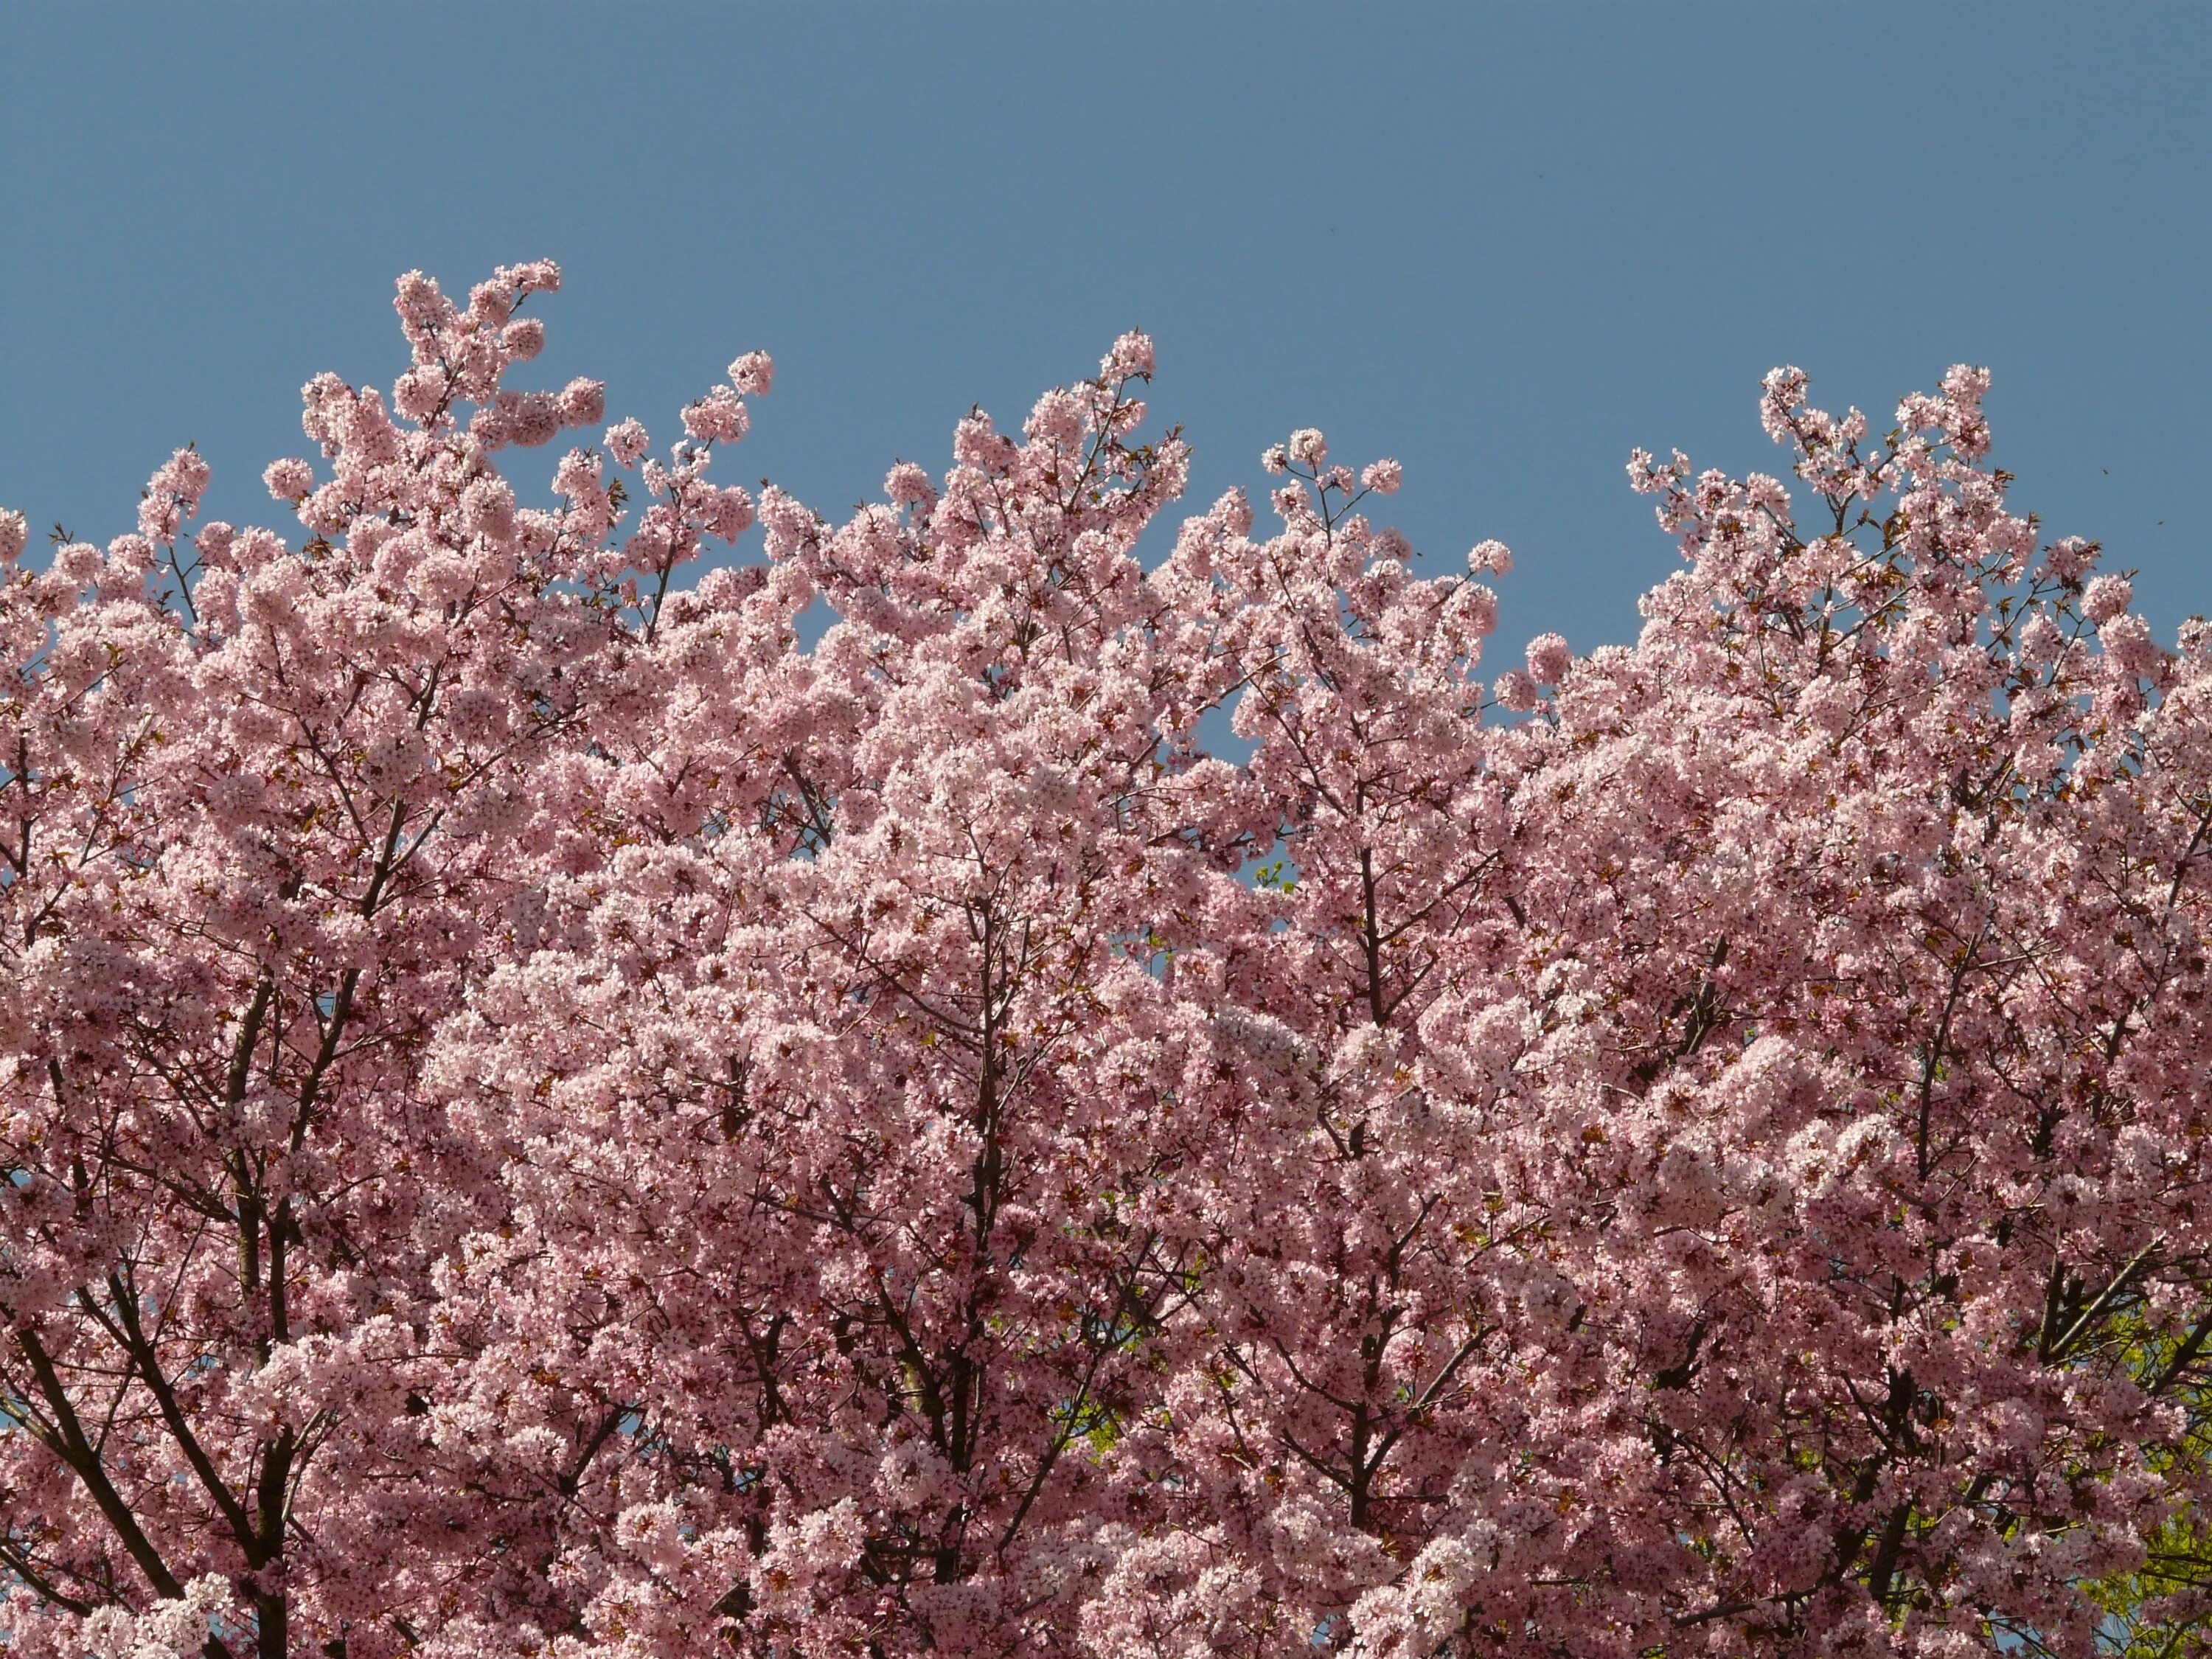 Сакура (вишня декоративная) Ошидори. Сакура дерево. Вишни в цвету. Японская вишня.